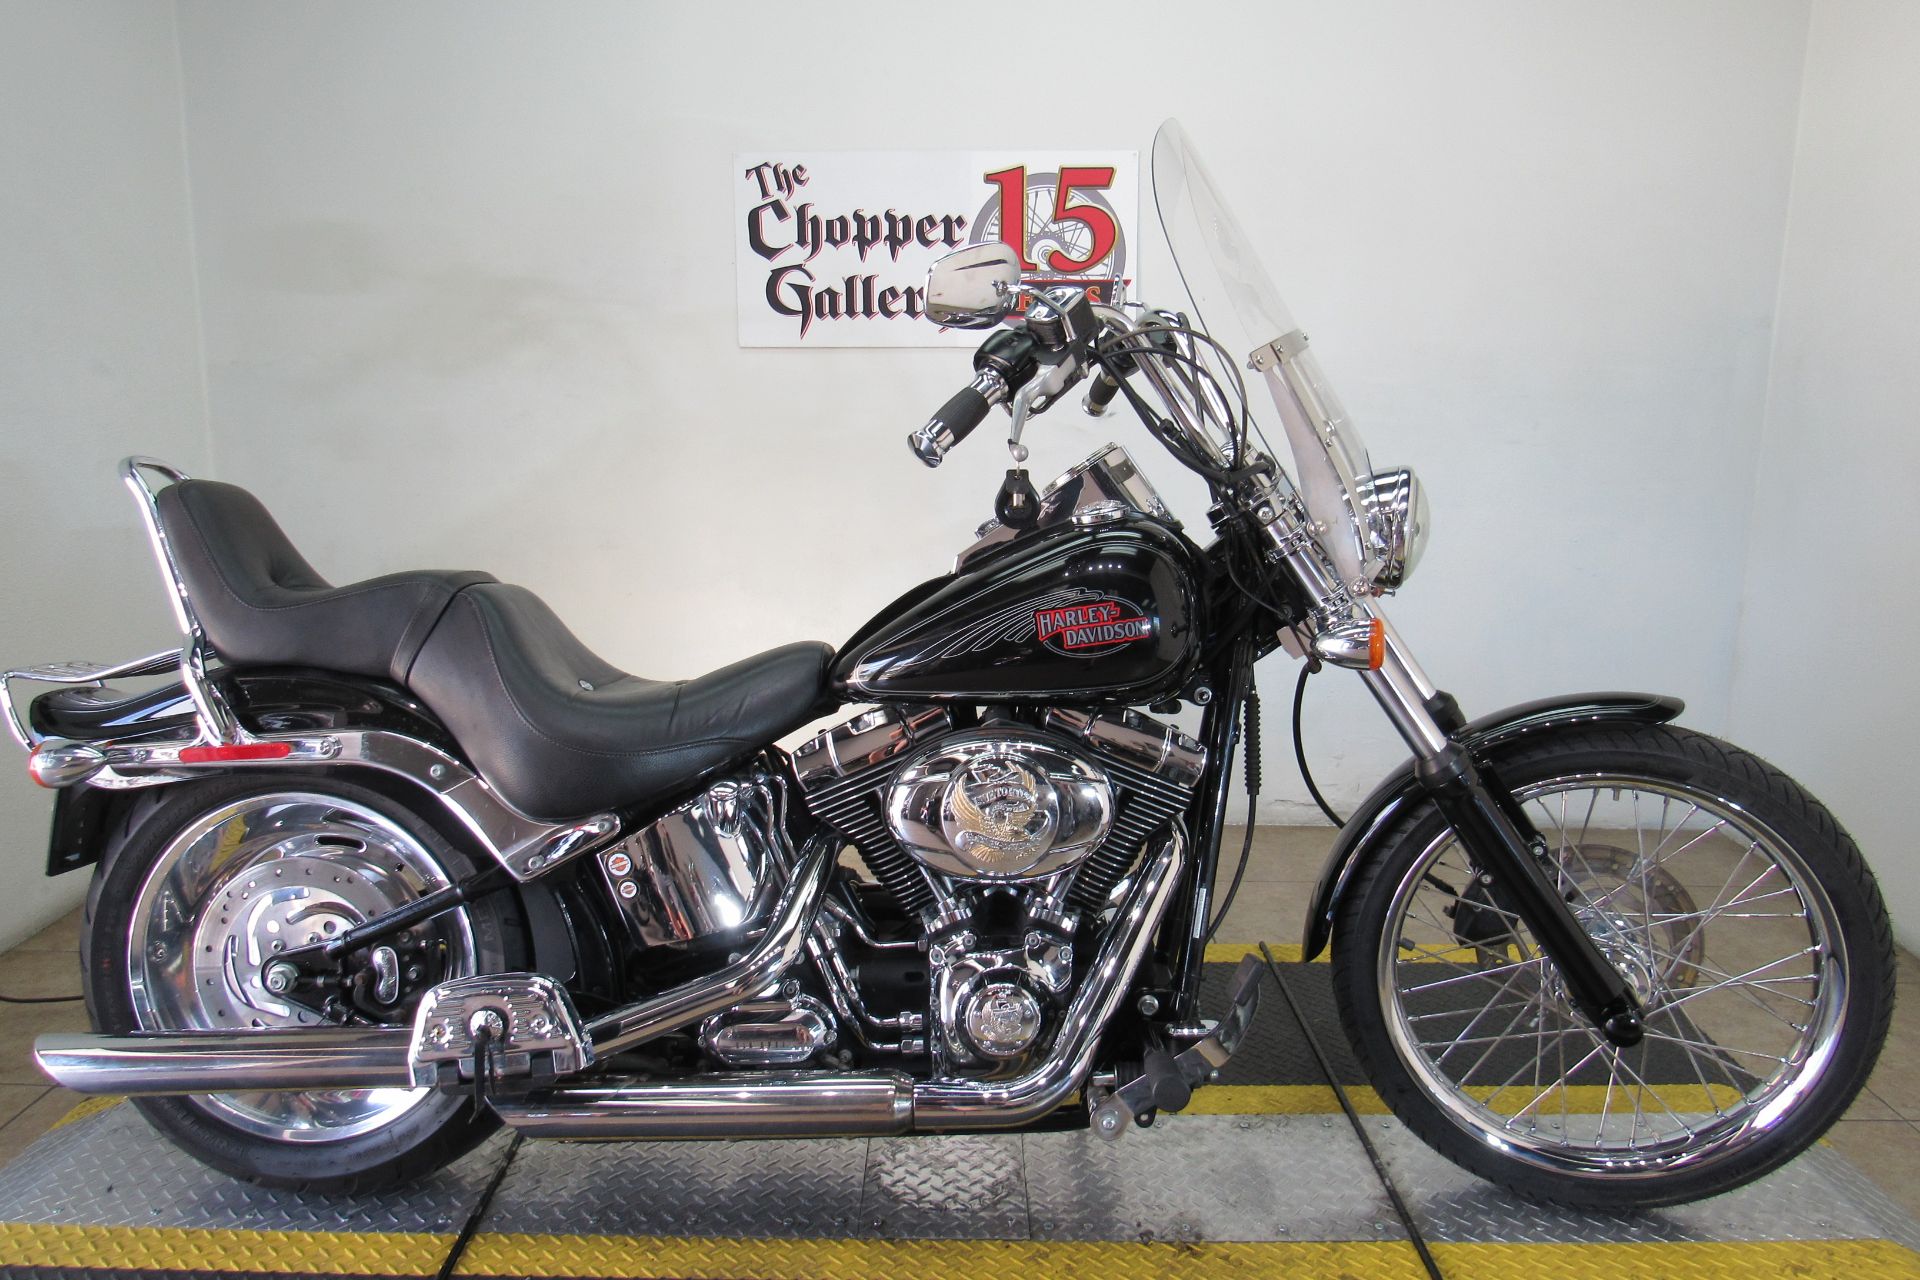 2007 Harley-Davidson Softail® Custom in Temecula, California - Photo 1